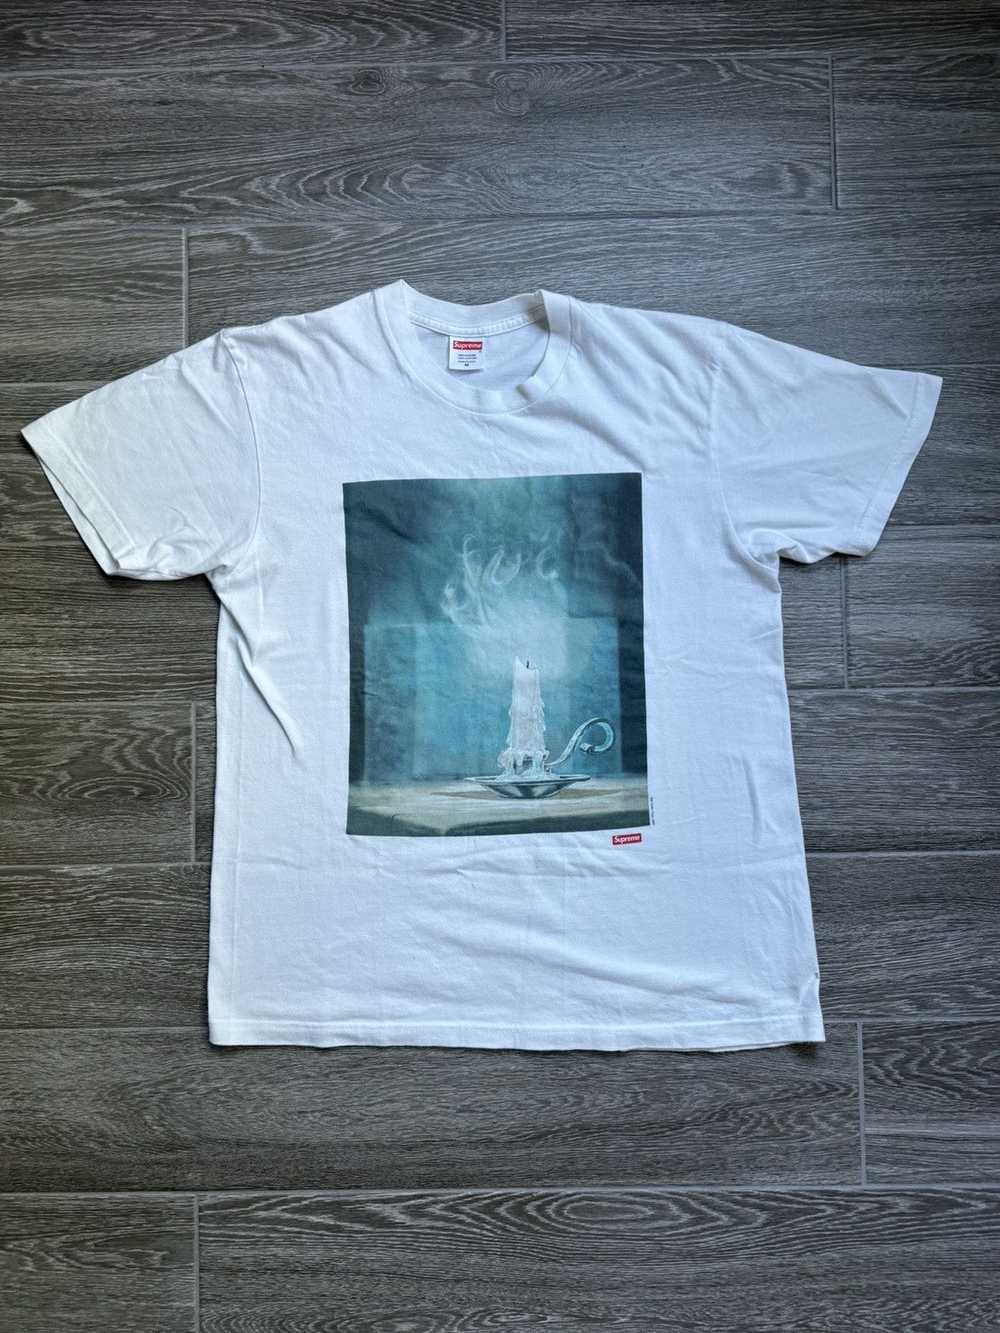 Supreme Supreme candle burning T-shirt - image 1